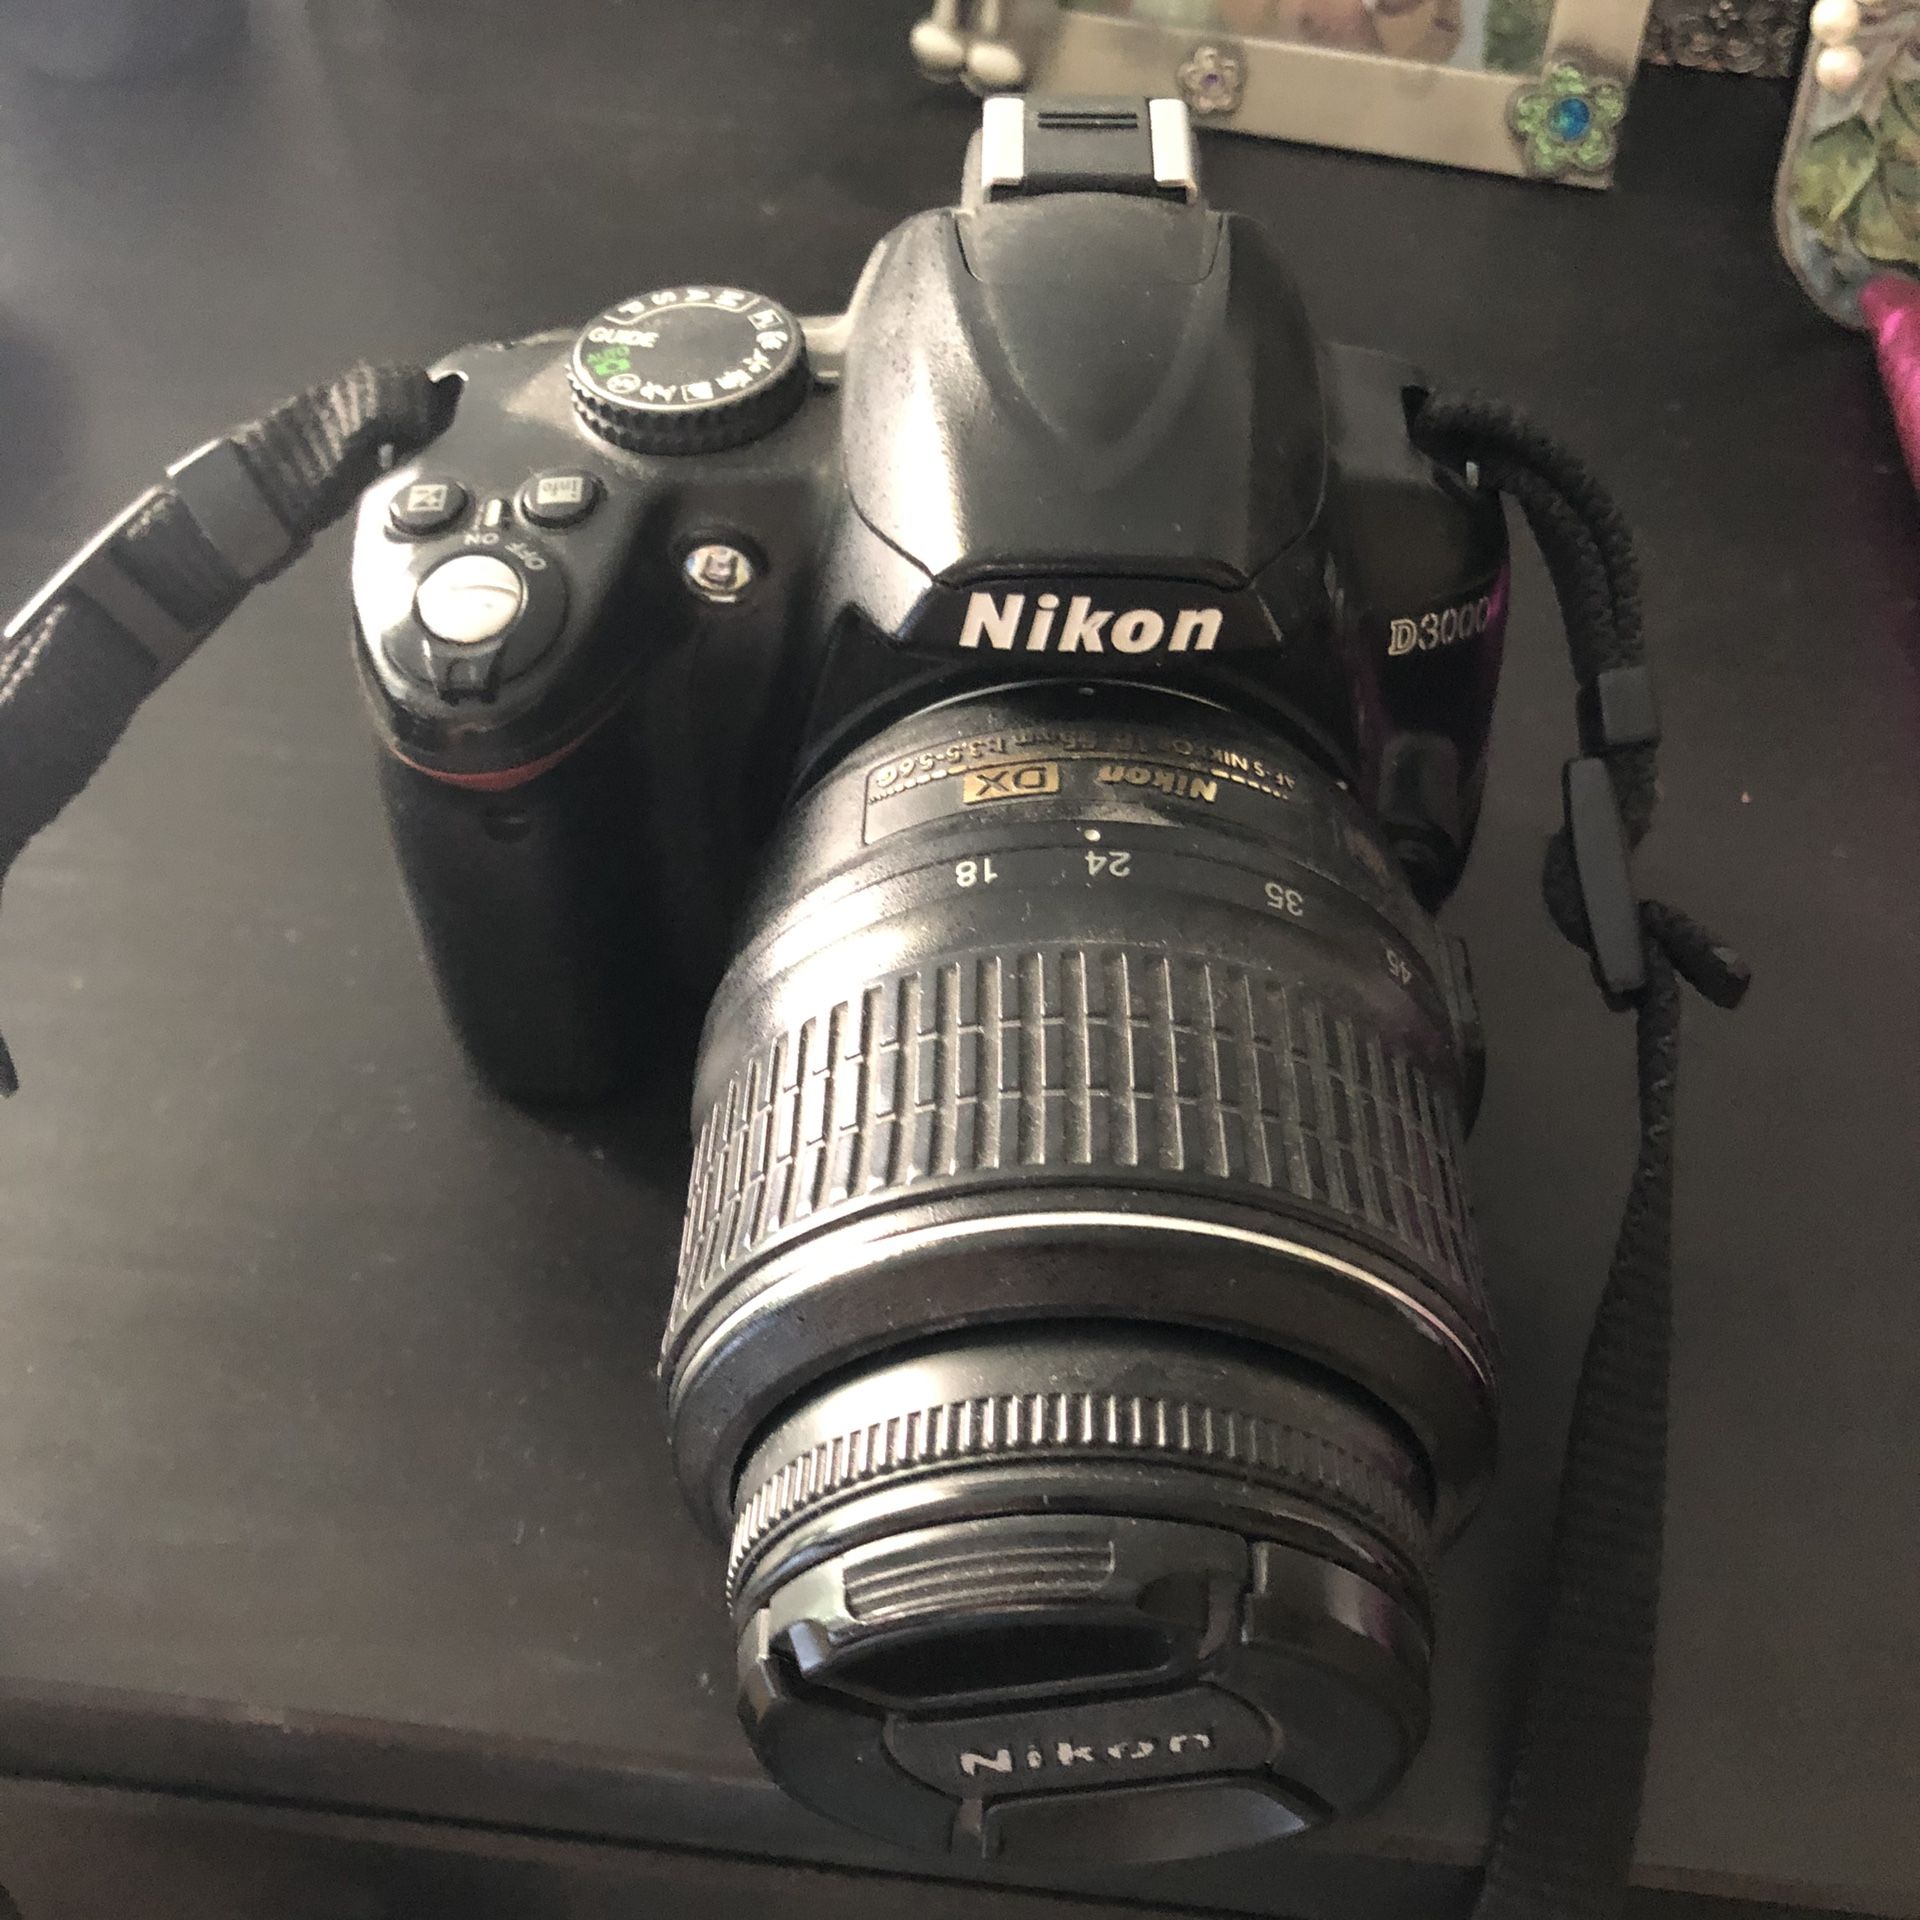 Nikon D3000 camera with lens